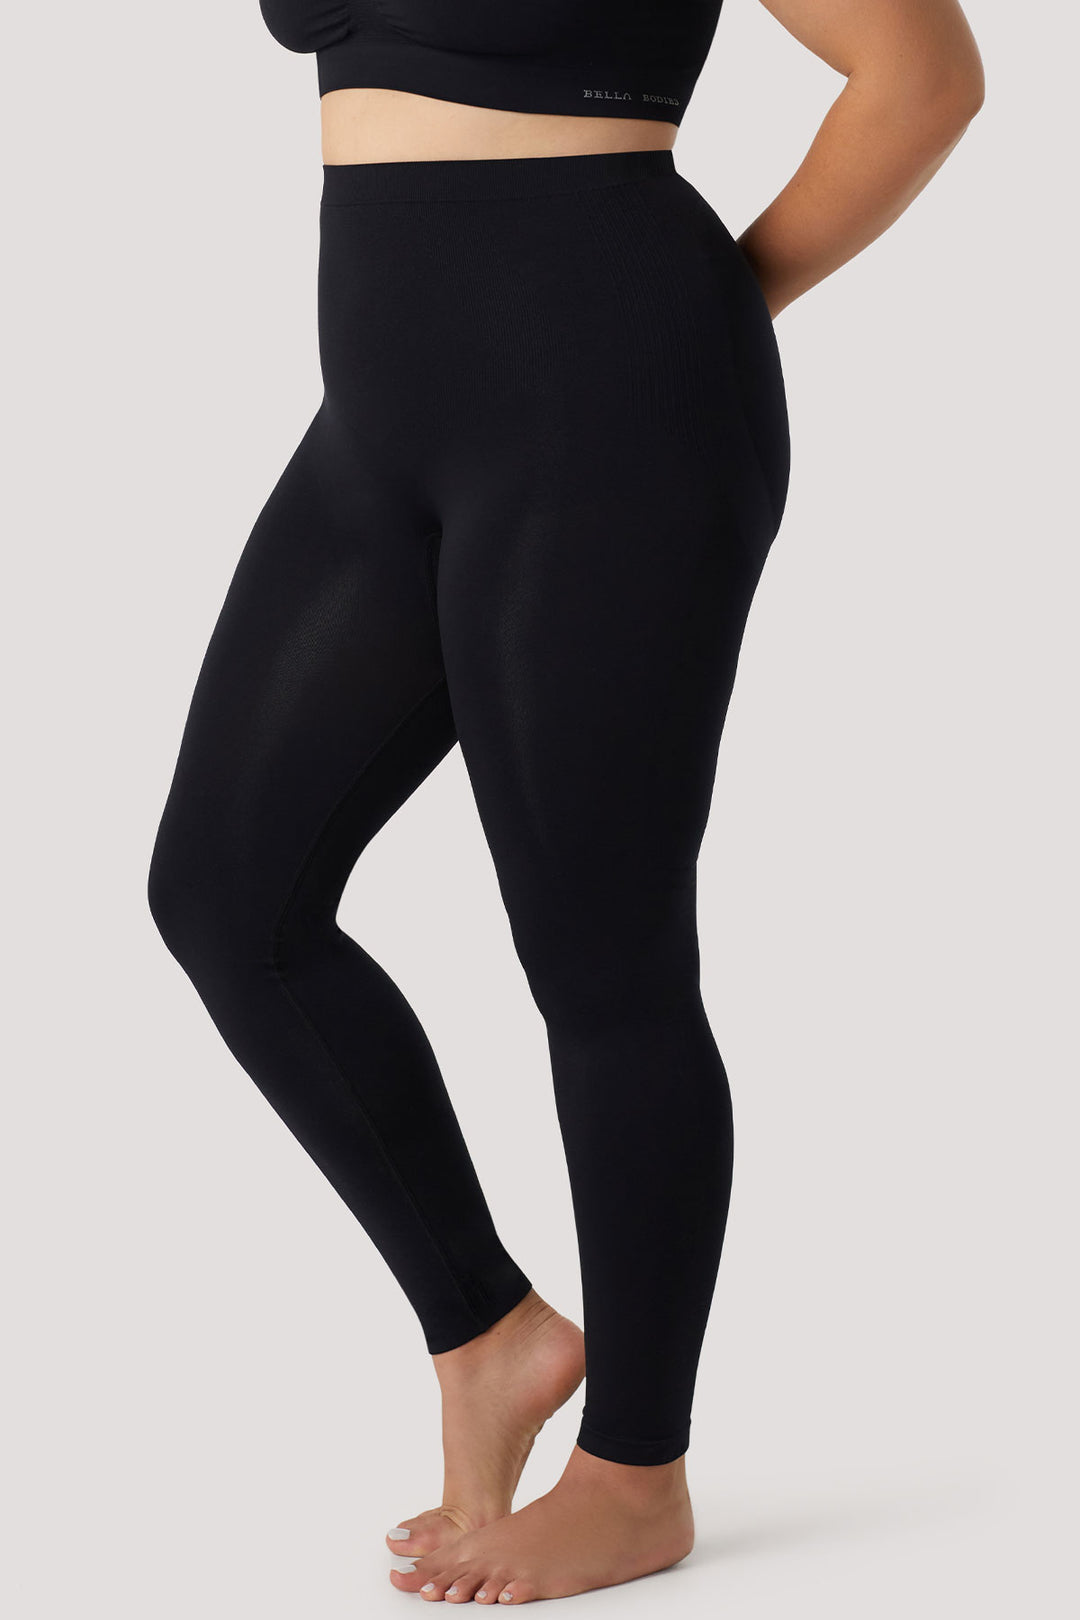 Women's Delicate Firming tights 2 Pack | Bella Bodies UK | Black | Side